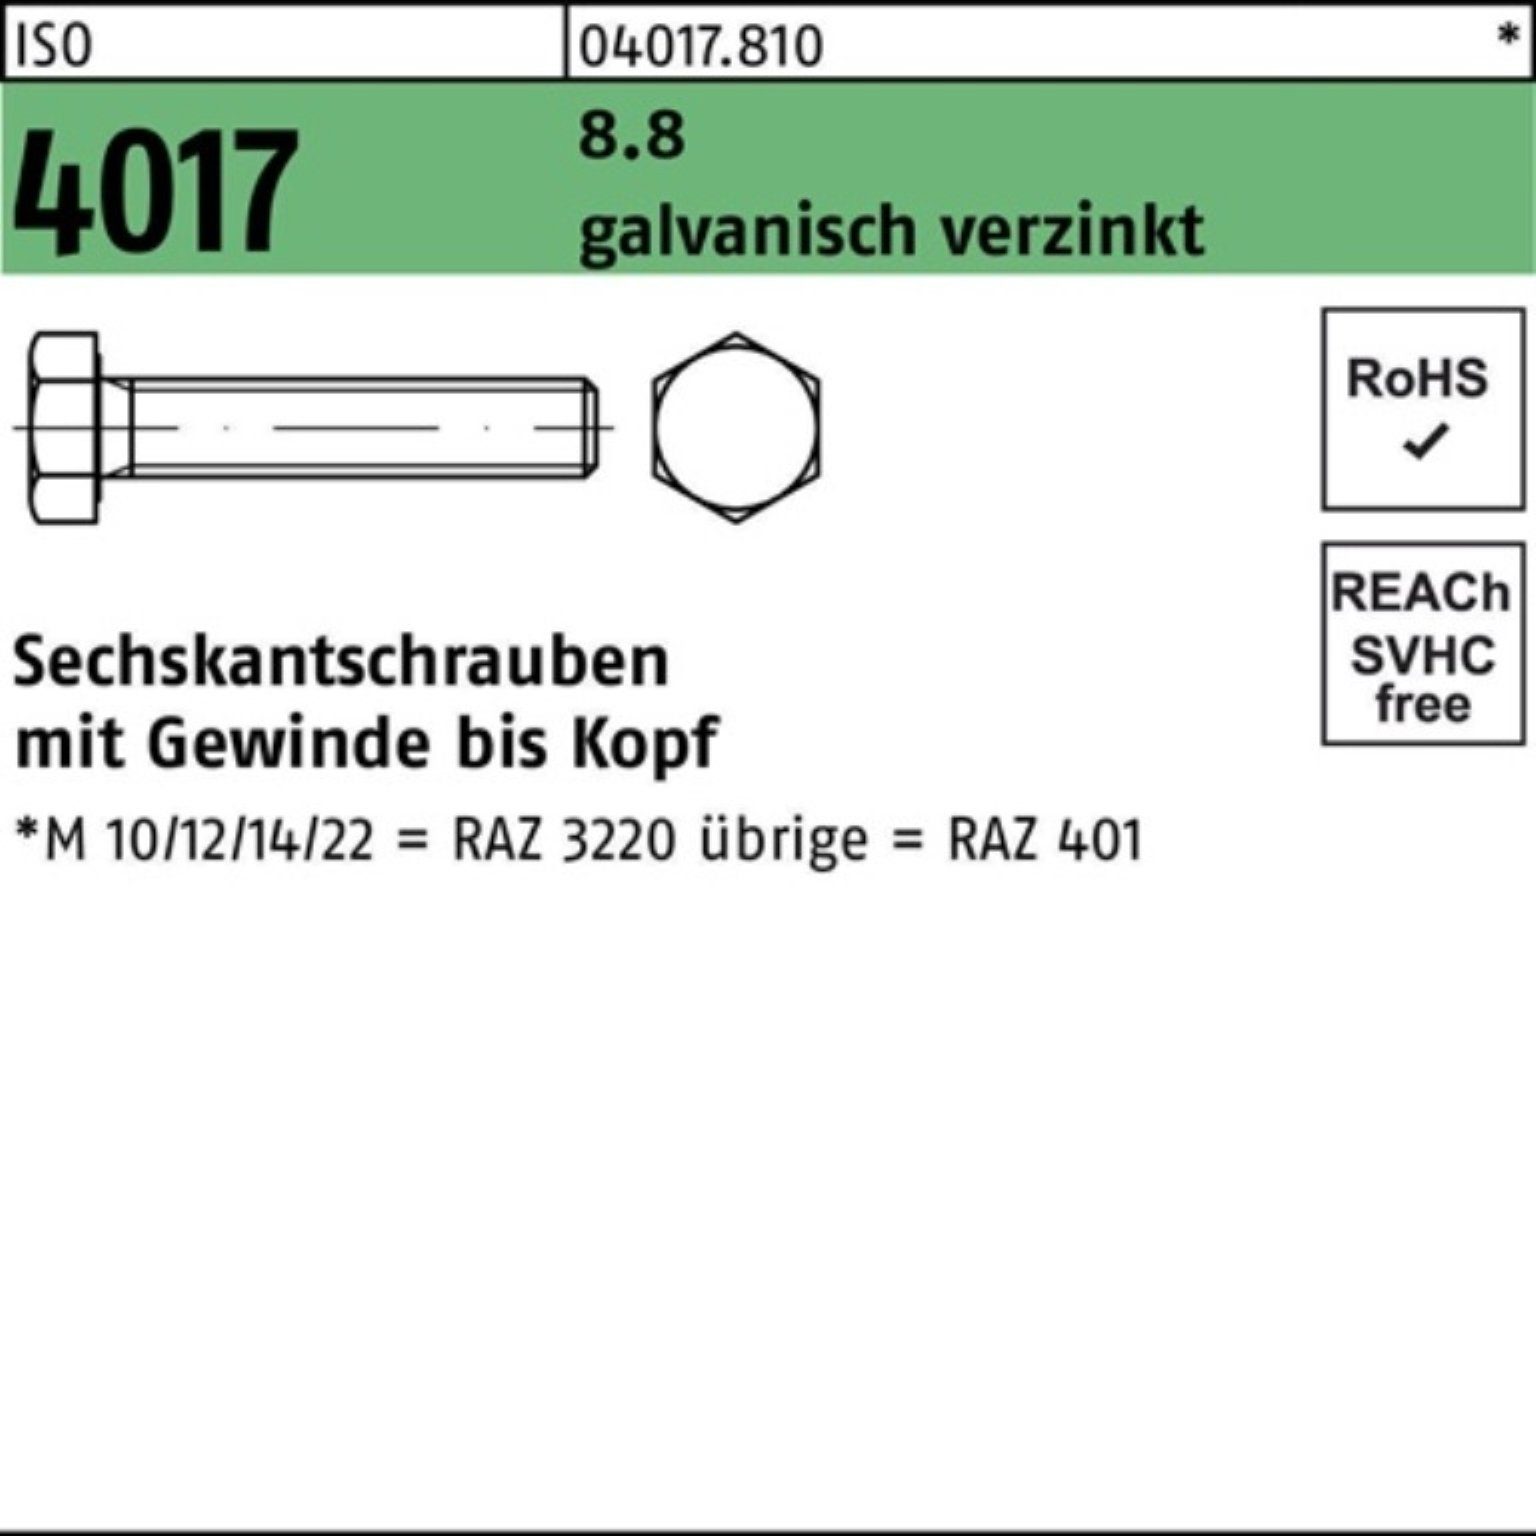 Bufab Sechskantschraube 100er 1 Sechskantschraube galv.verz. Pack M30x 4017 55 VG ISO 8.8 Stü